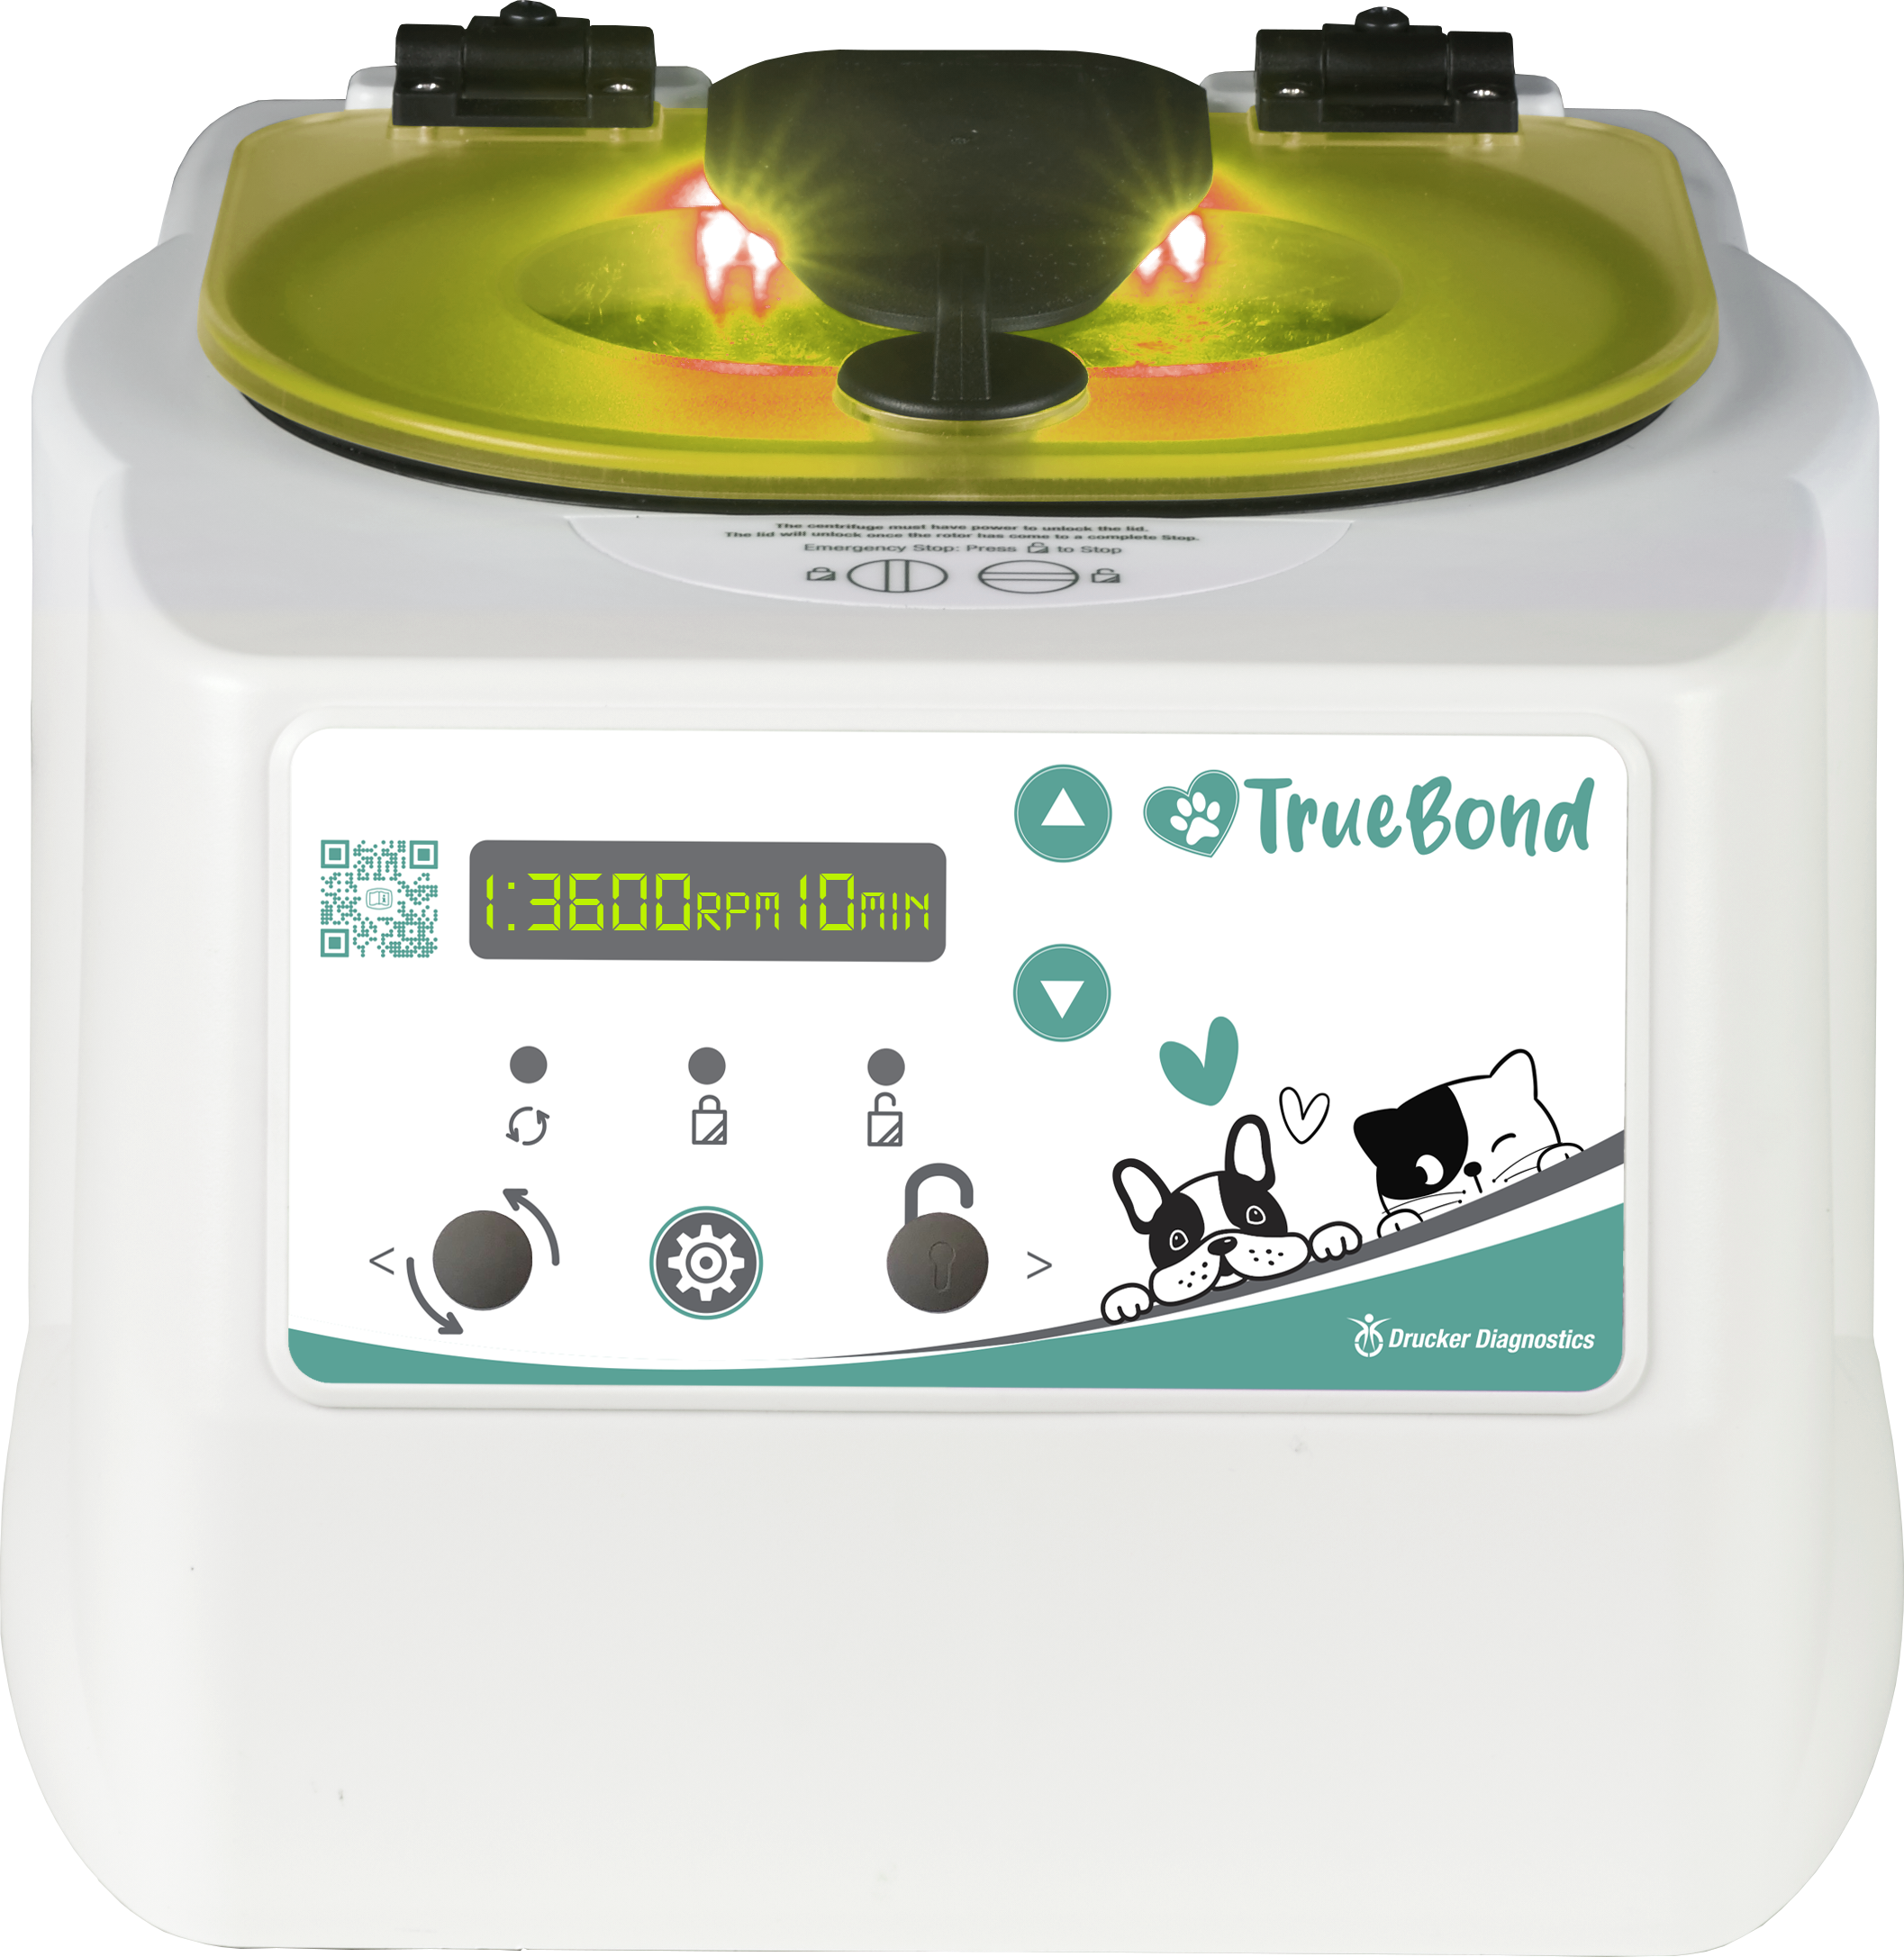 The TrueBond animal health centrifuge shows its digital display and status tracker lid lighting illuminated